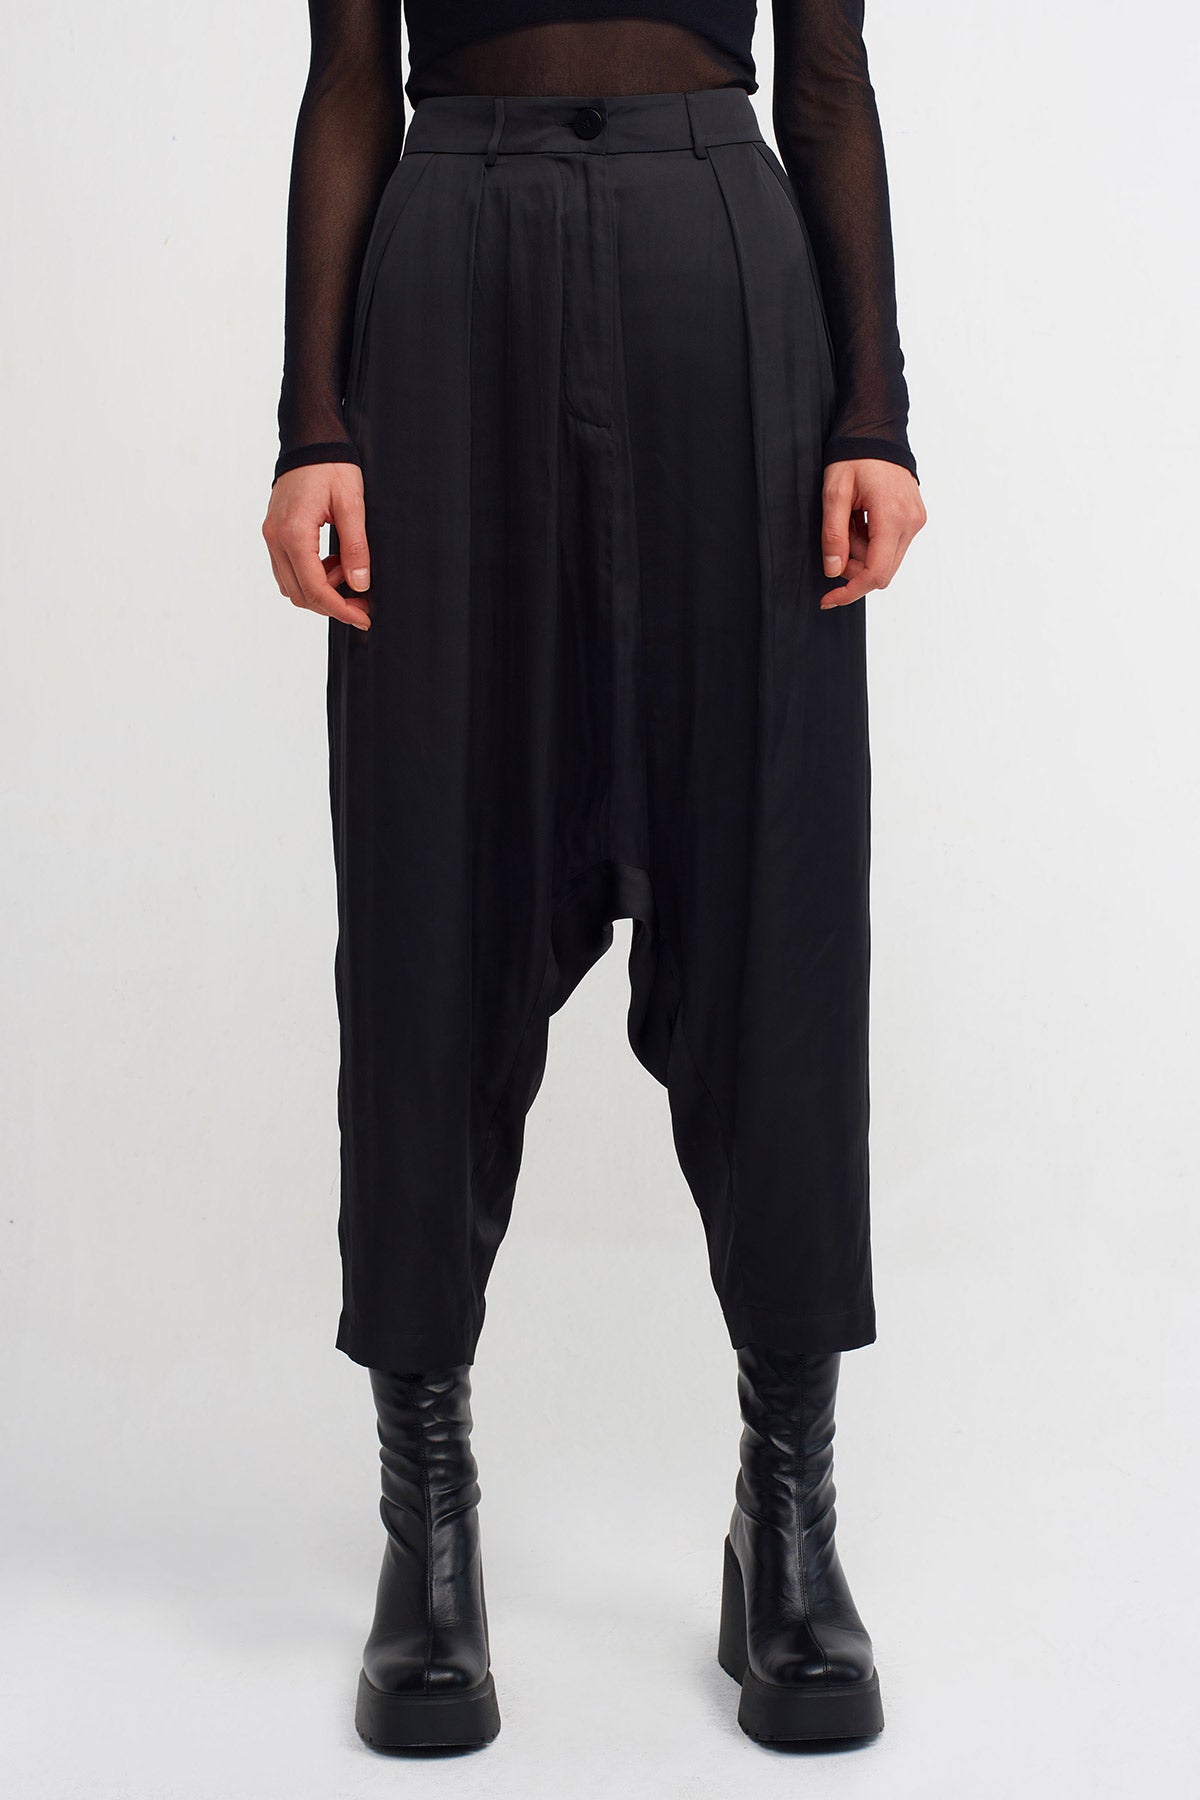 Black Pleated Satin Trousers-K233013069